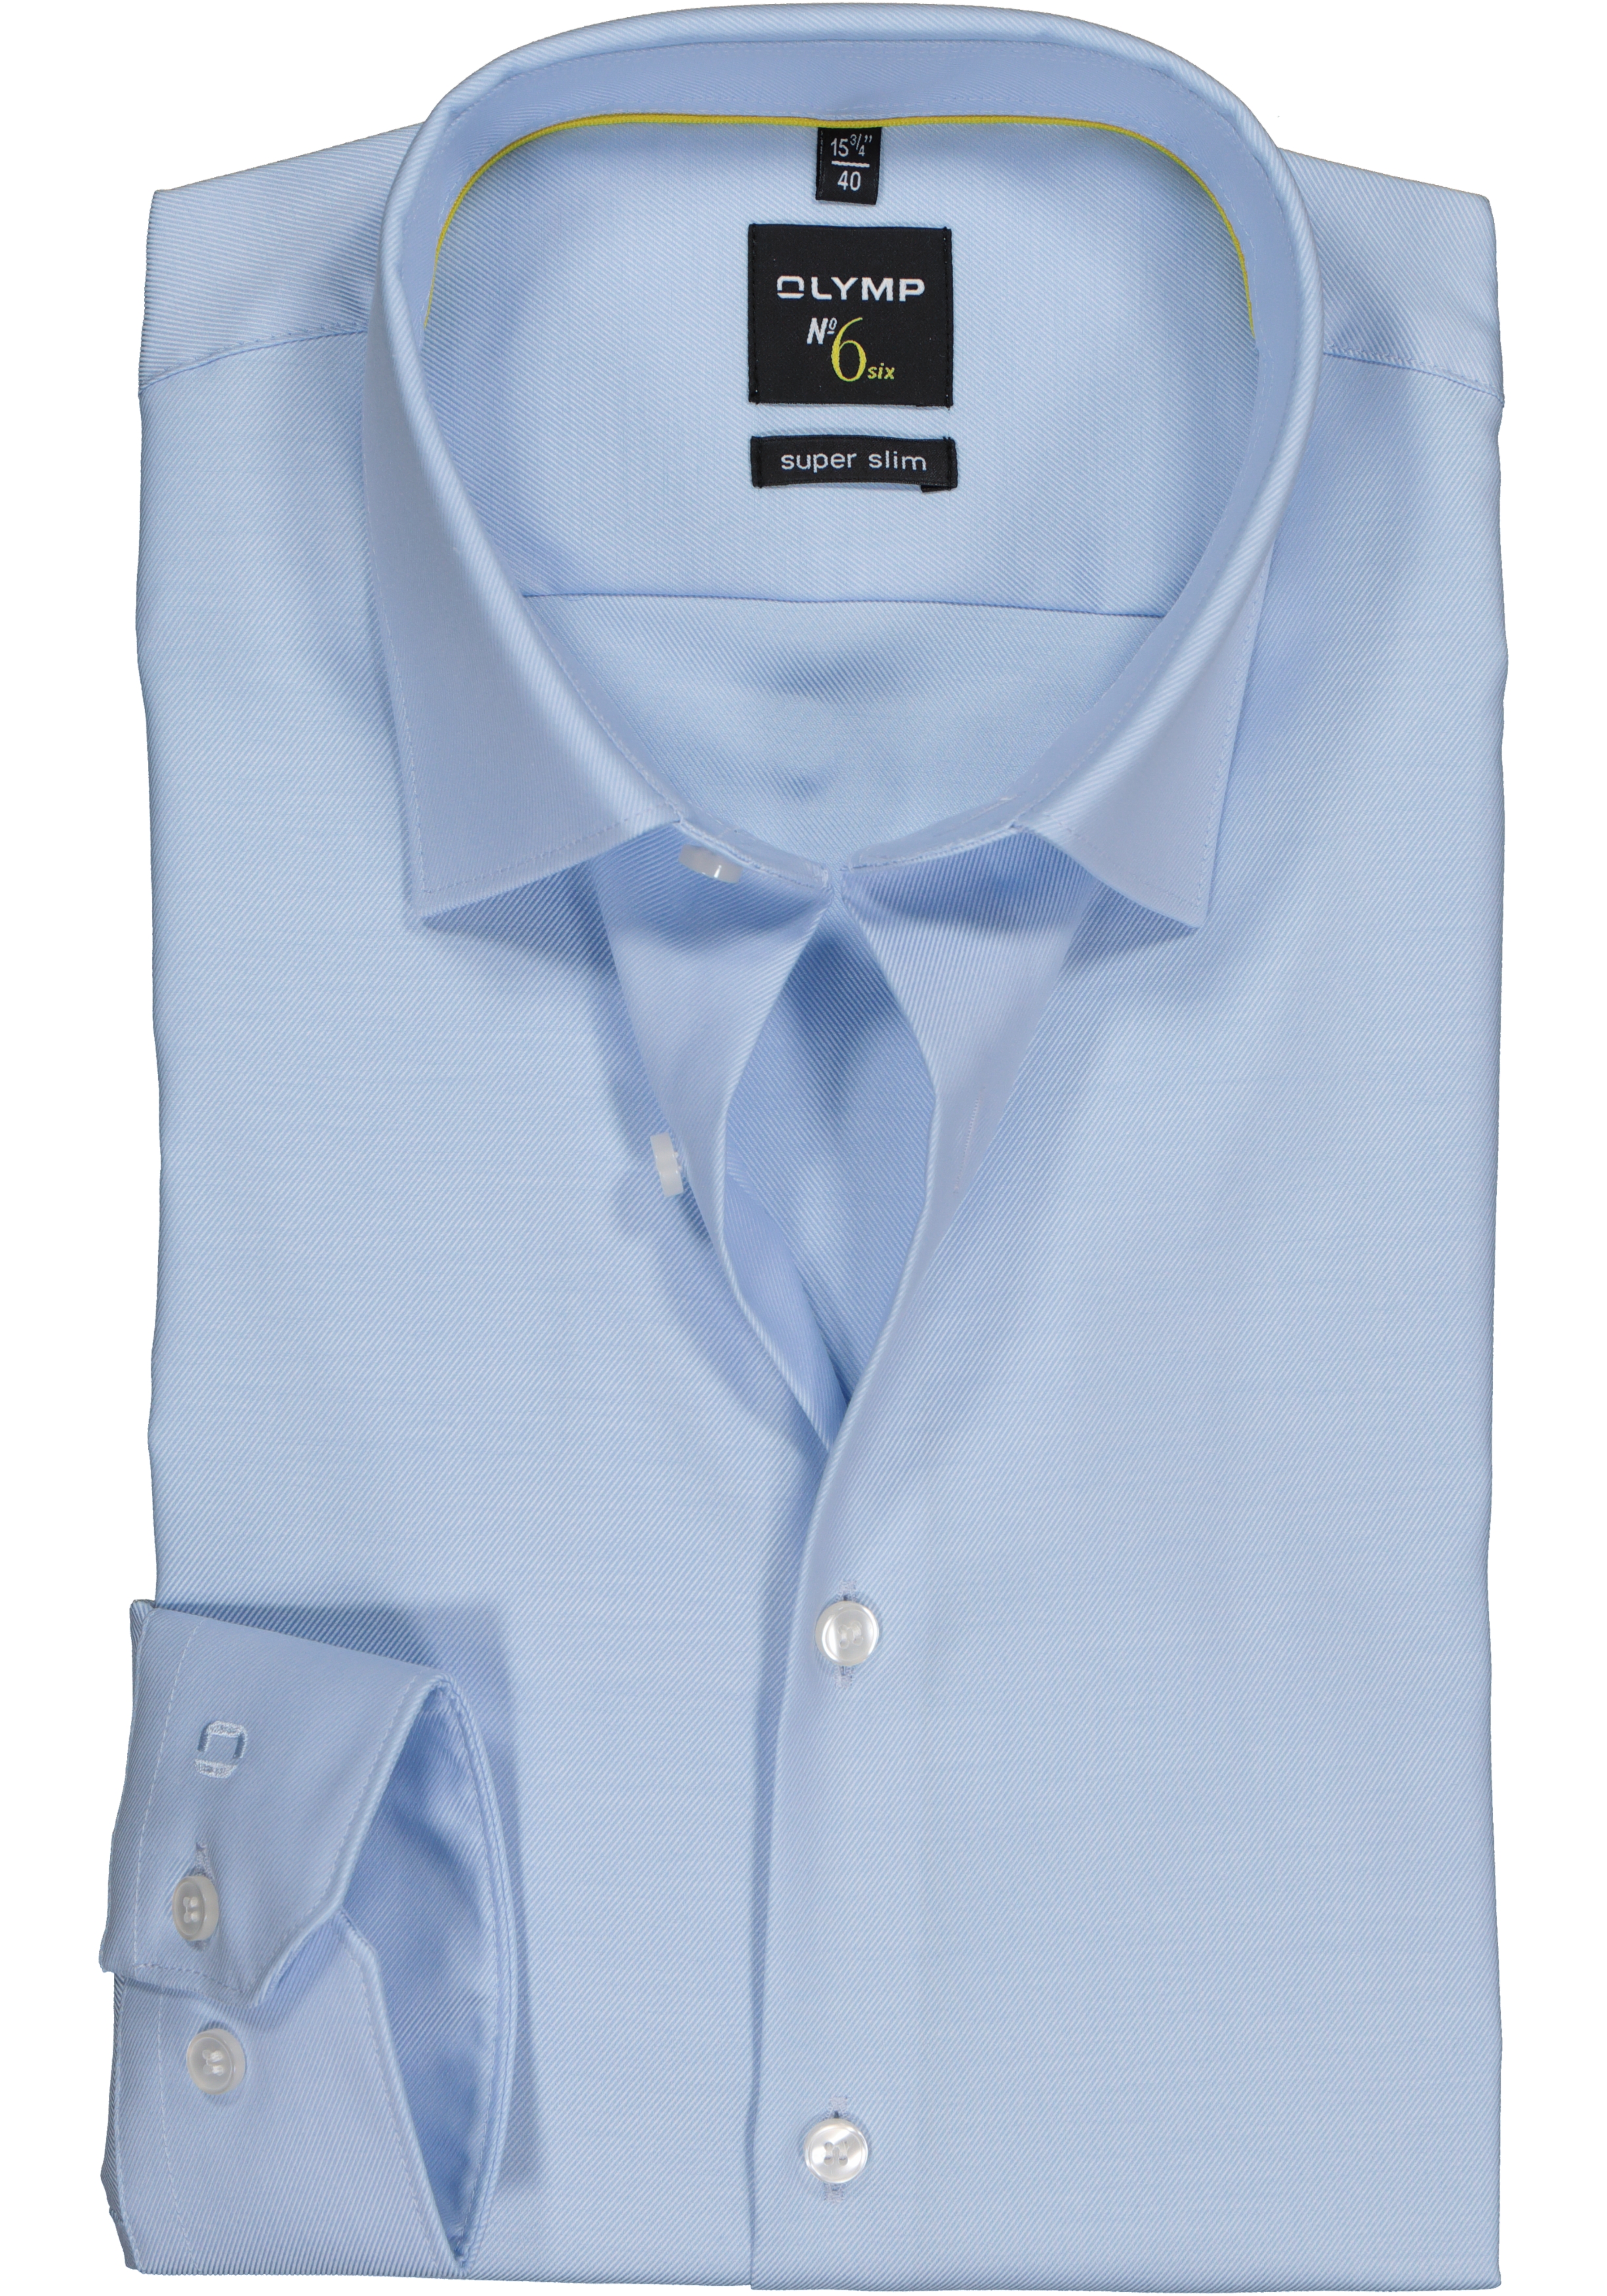 OLYMP No. Six super slim fit overhemd, lichtblauw twill